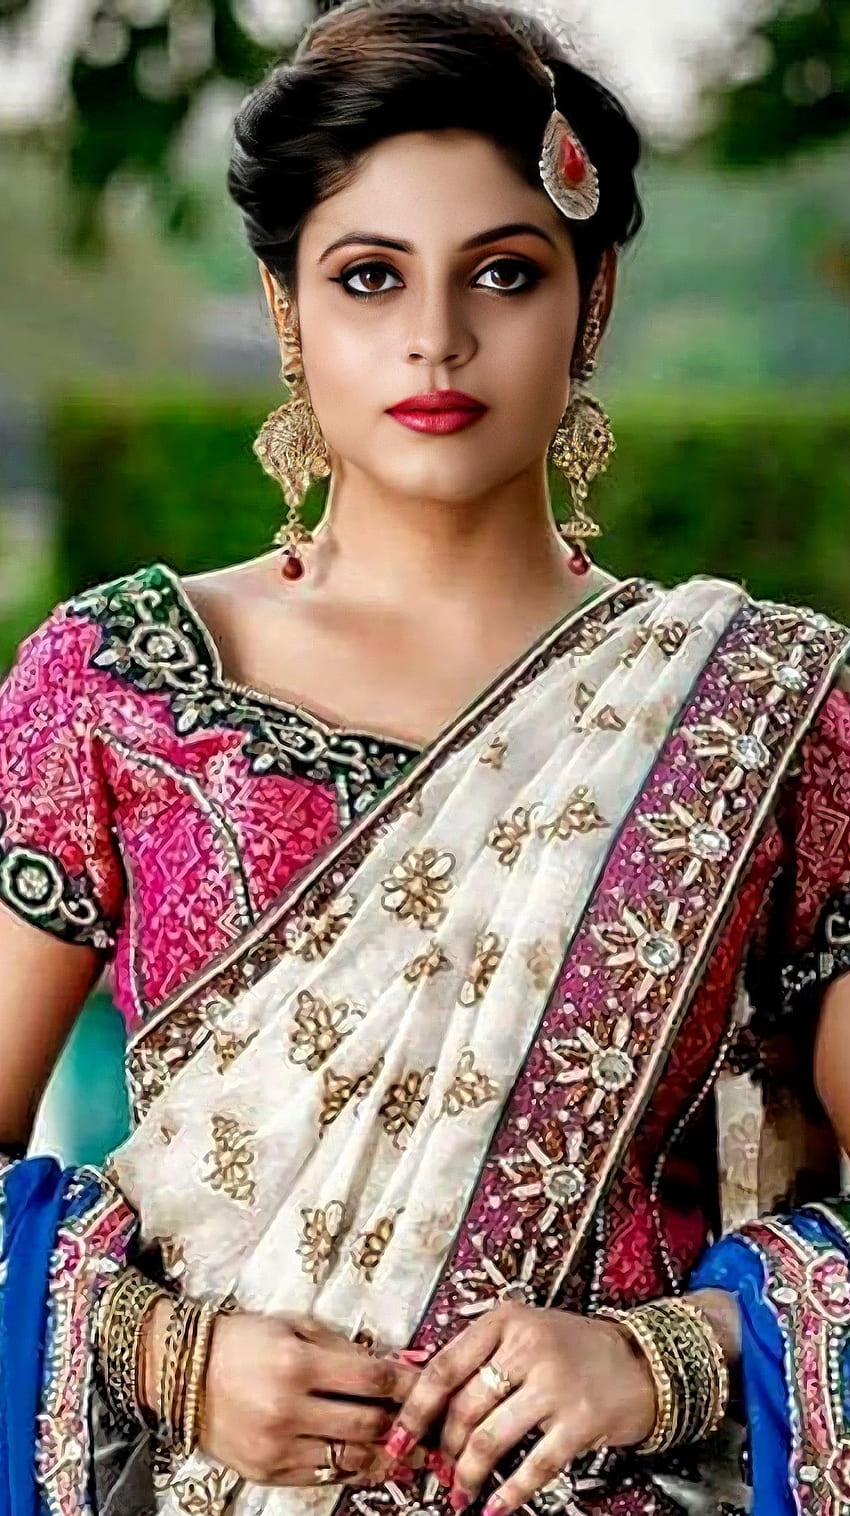 Ineya , malajalam aktorka Tapeta na telefon HD